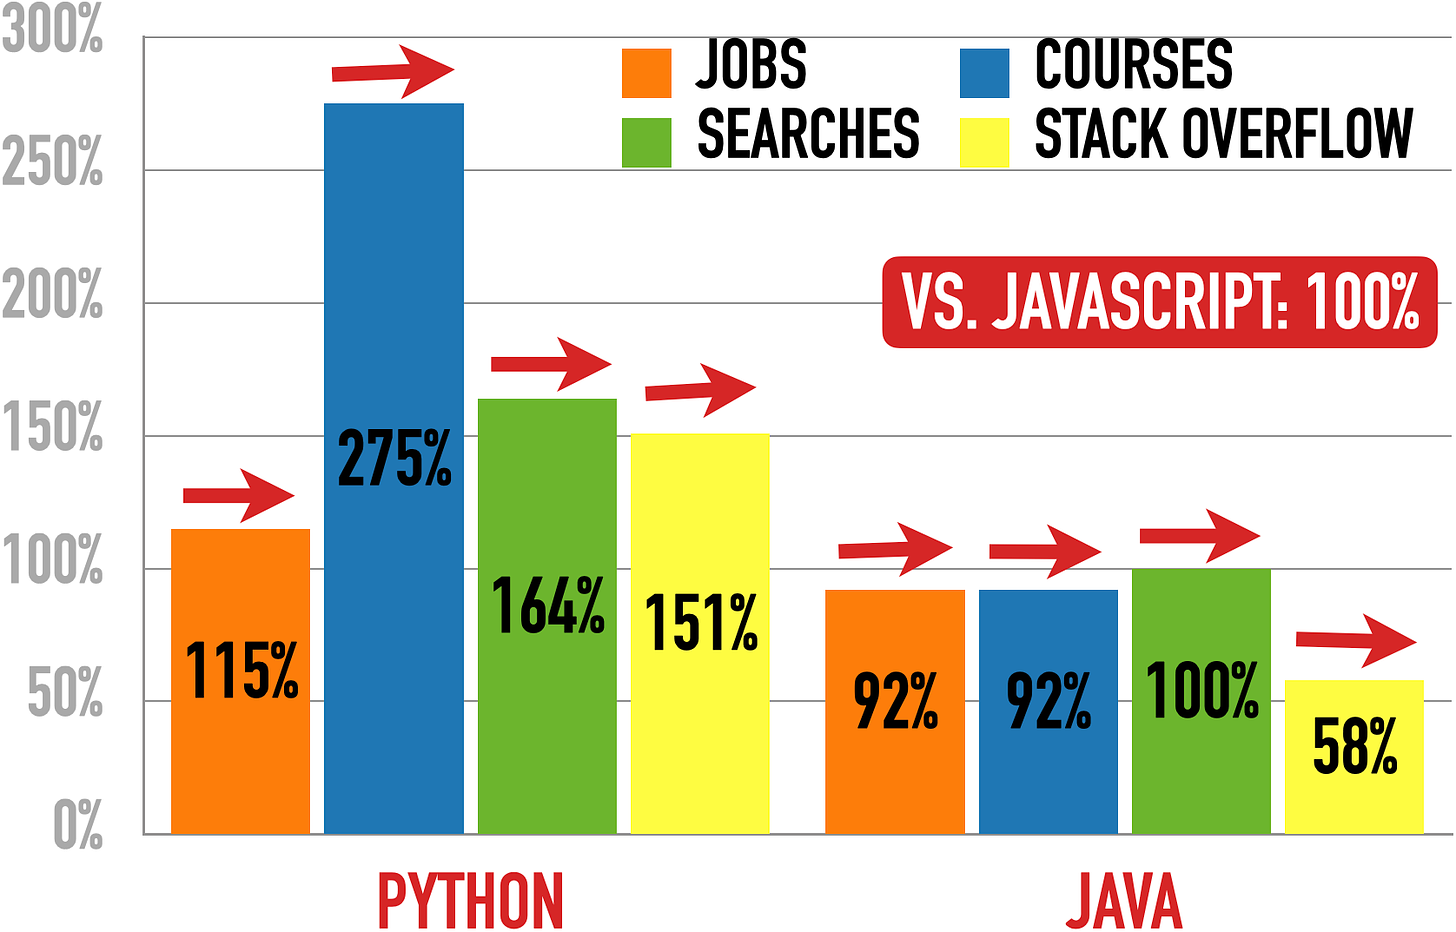 Python (left) And Java (right) vs. JavaScript (100%)